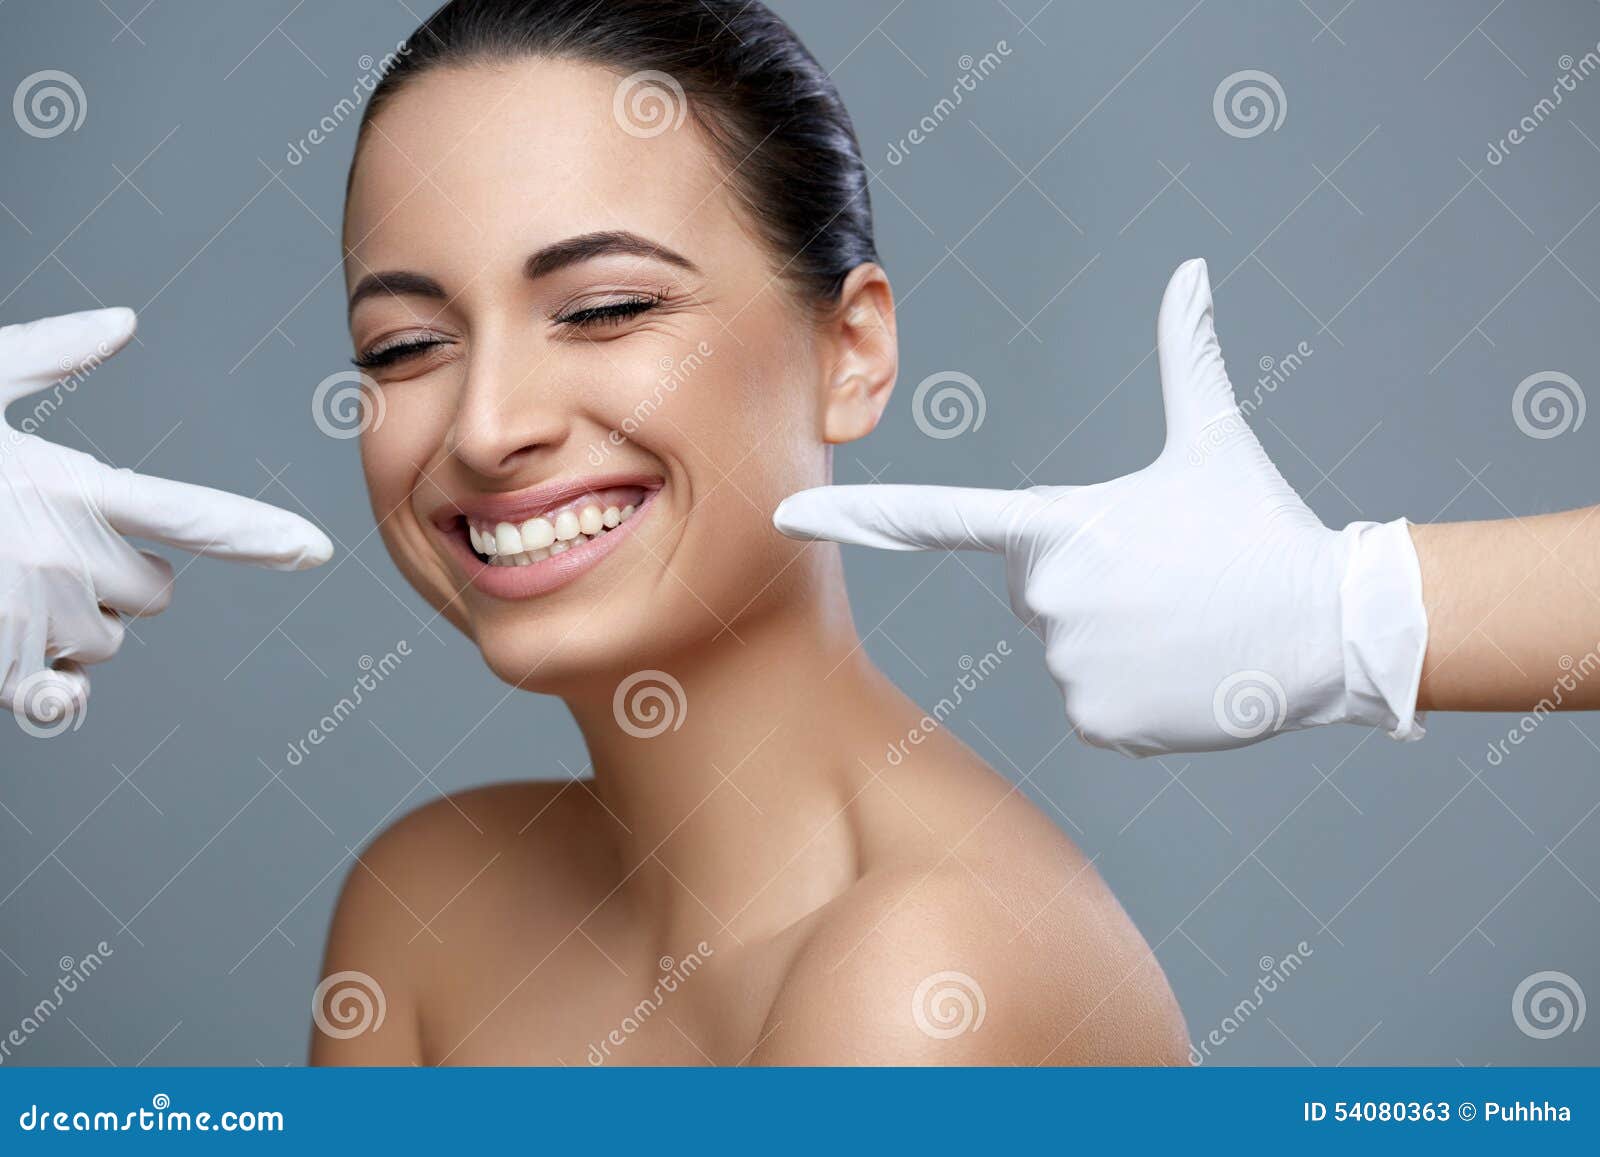 woman smile. teeth whitening. dental care.